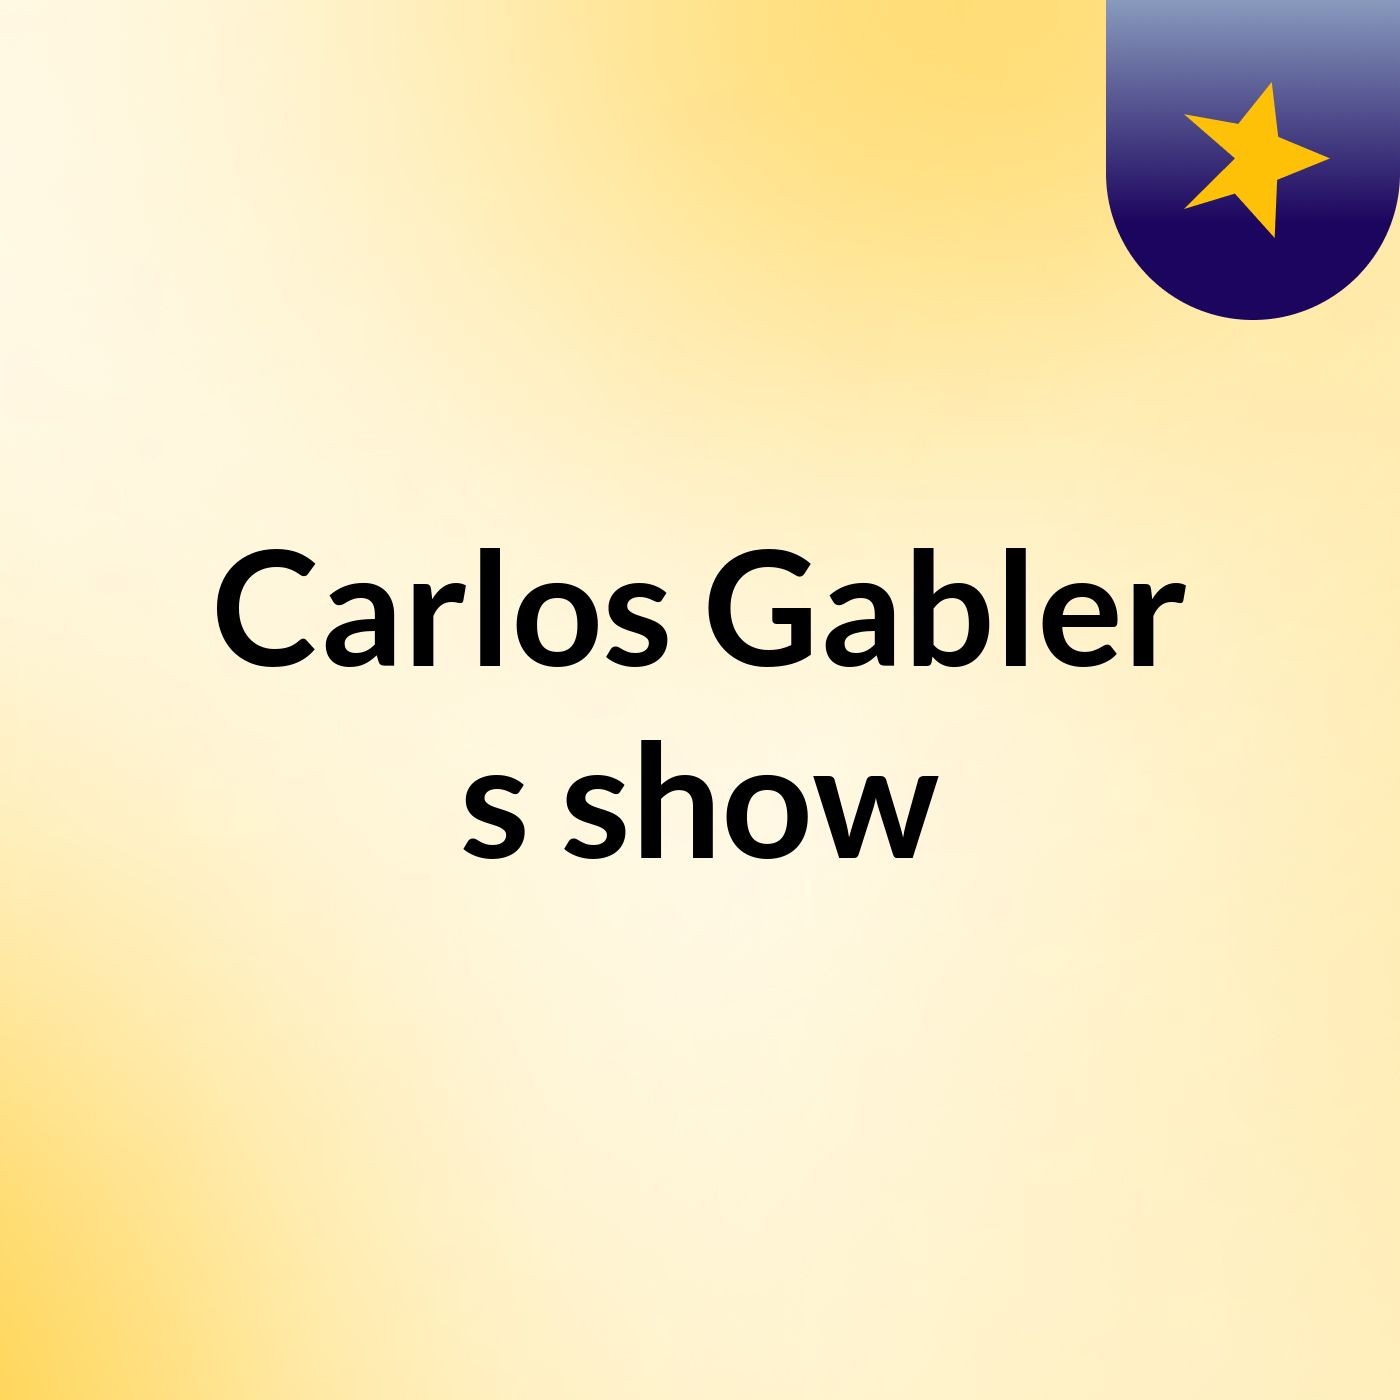 Carlos Gabler's show